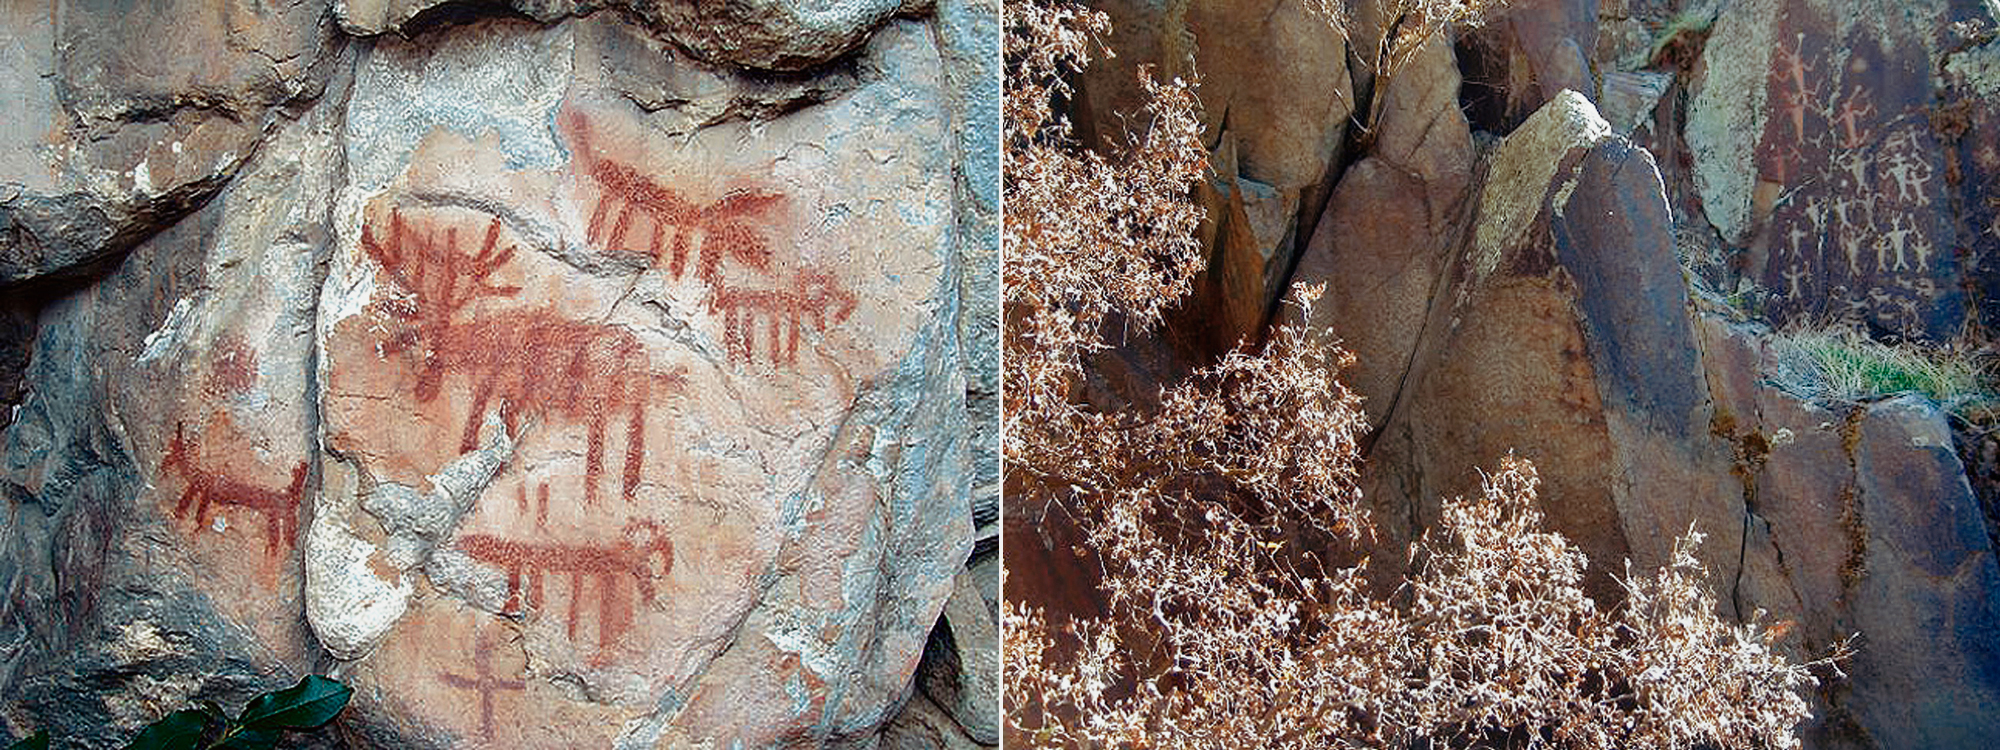 Rock Art Oregon Territory Middle Fork Salmon River Buffalo Eddy Petroglyphs Pictographs Bradshaw Foundation Archaeology USA America United States